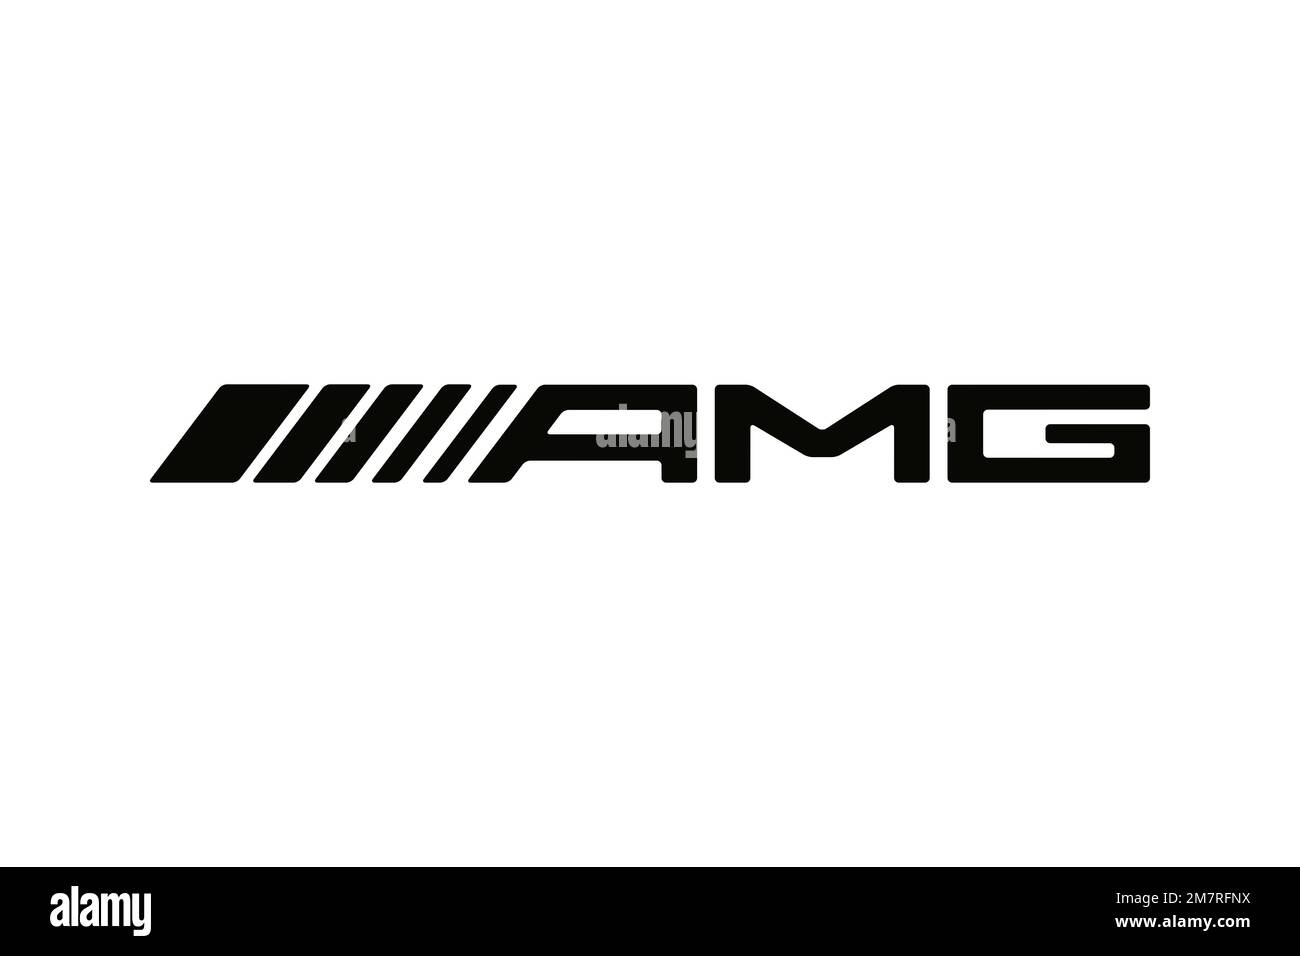 amg logo paper texture illustration Stock Photo - Alamy